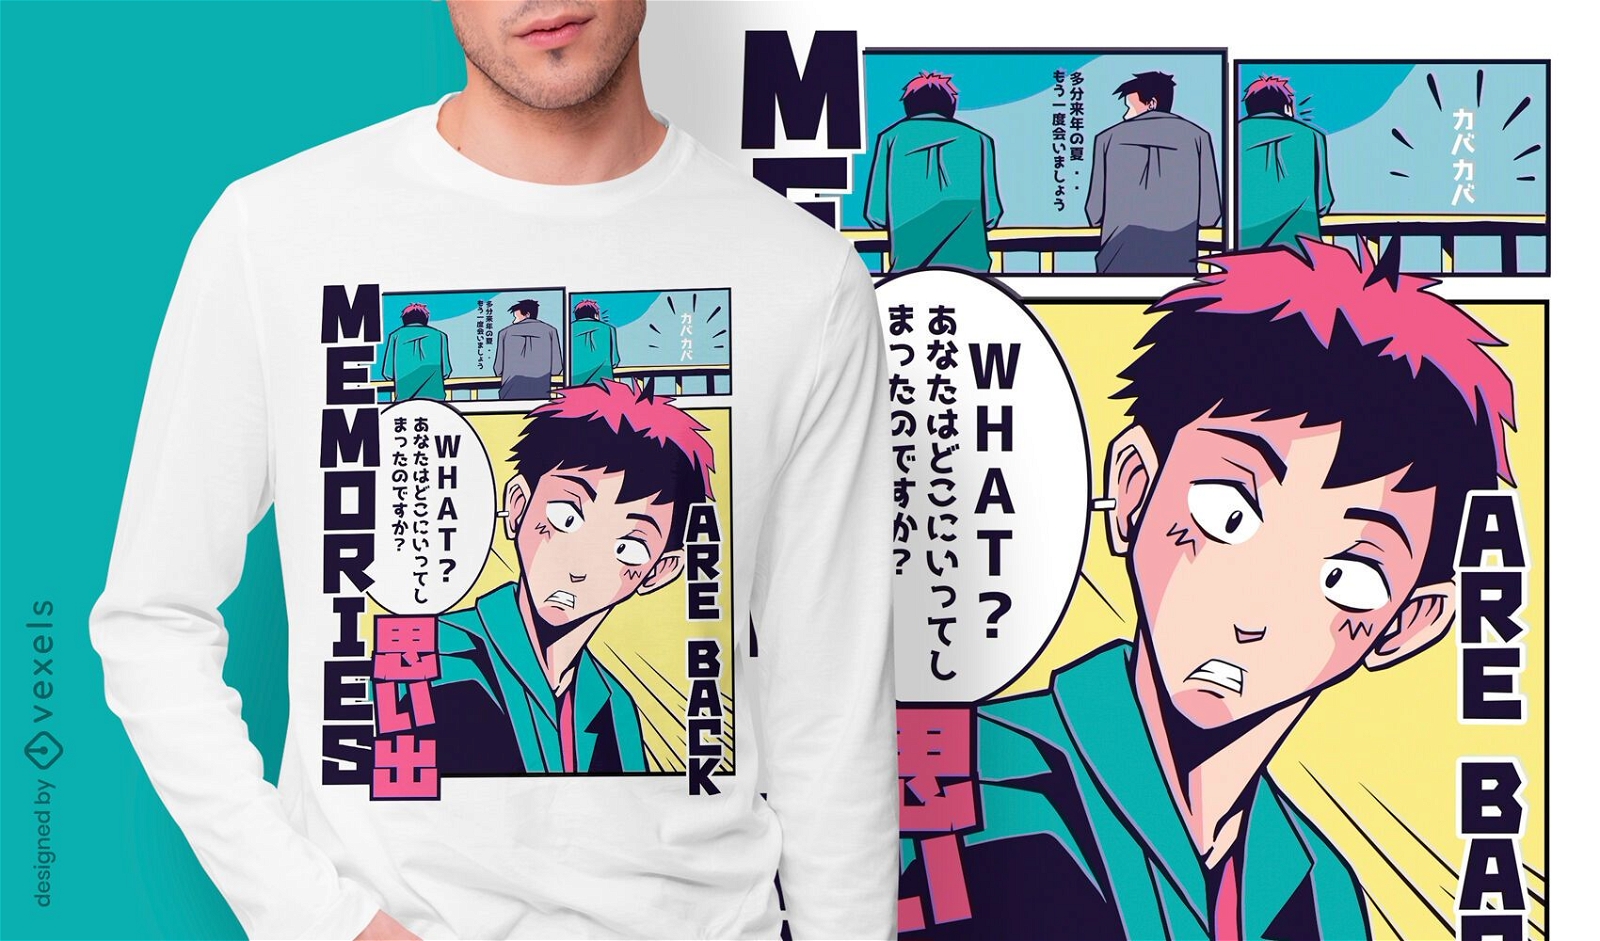 Memories anime vaporwave t-shirt design